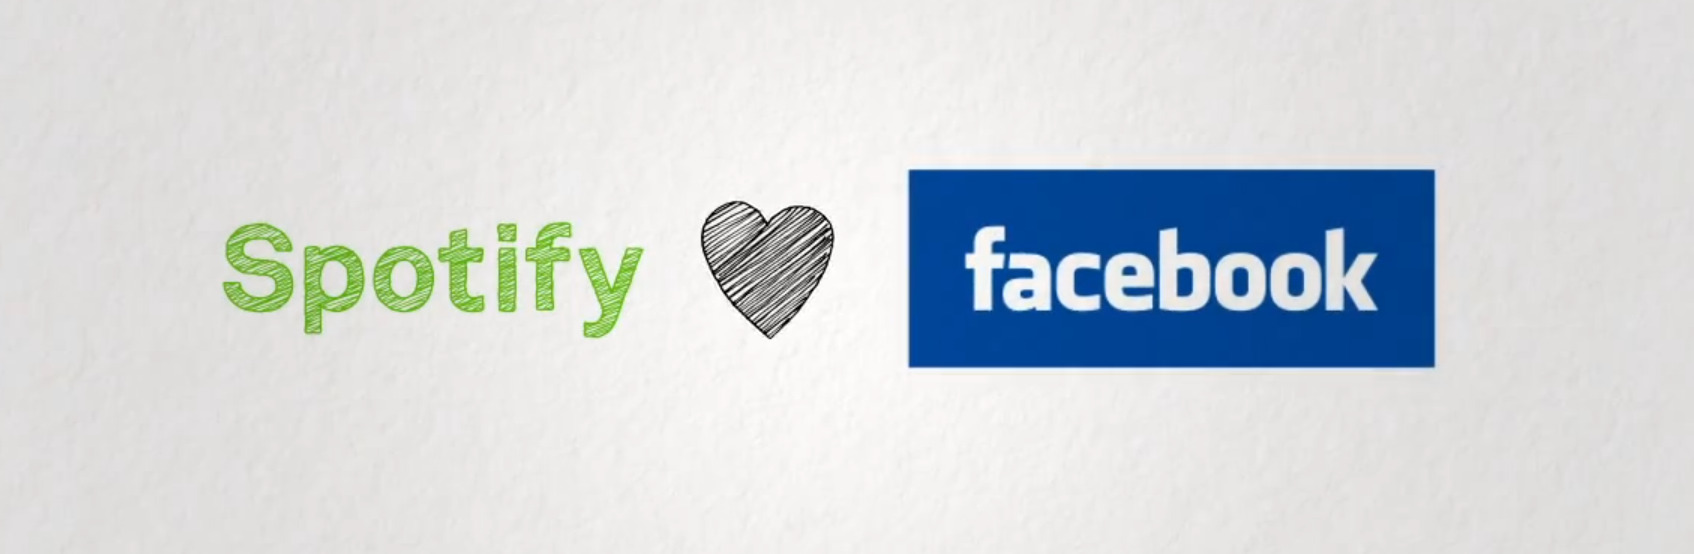 facebook-music-spotify-logo